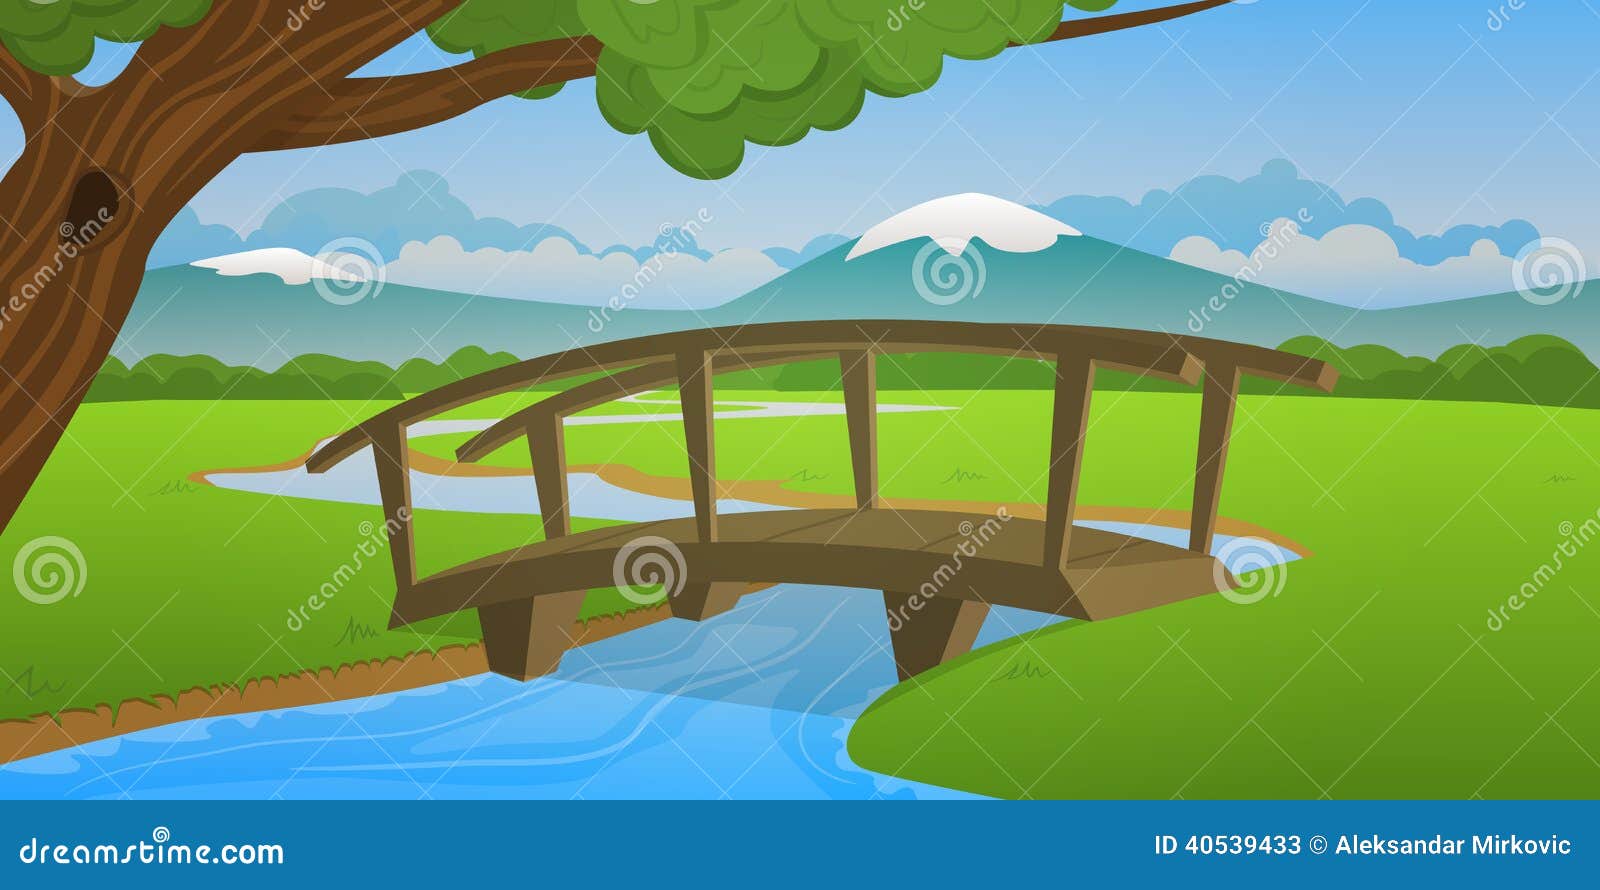 Small Wooden Bridge